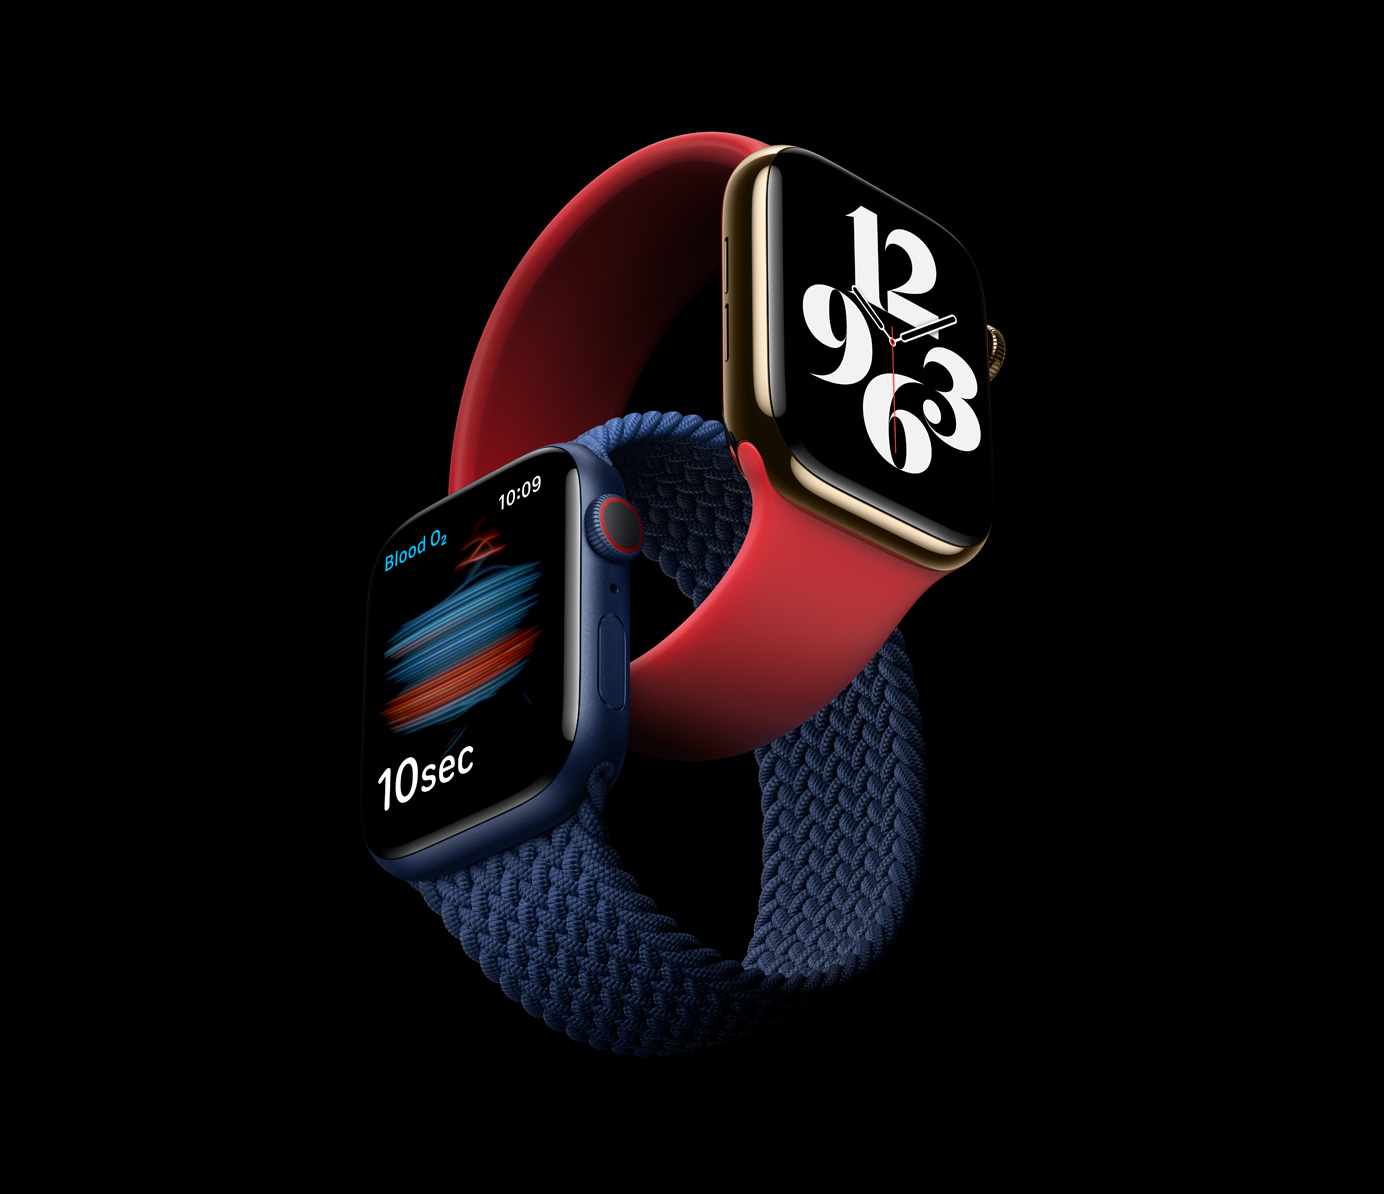 Apple announces Apple Watch Series 6, Apple Watch SE